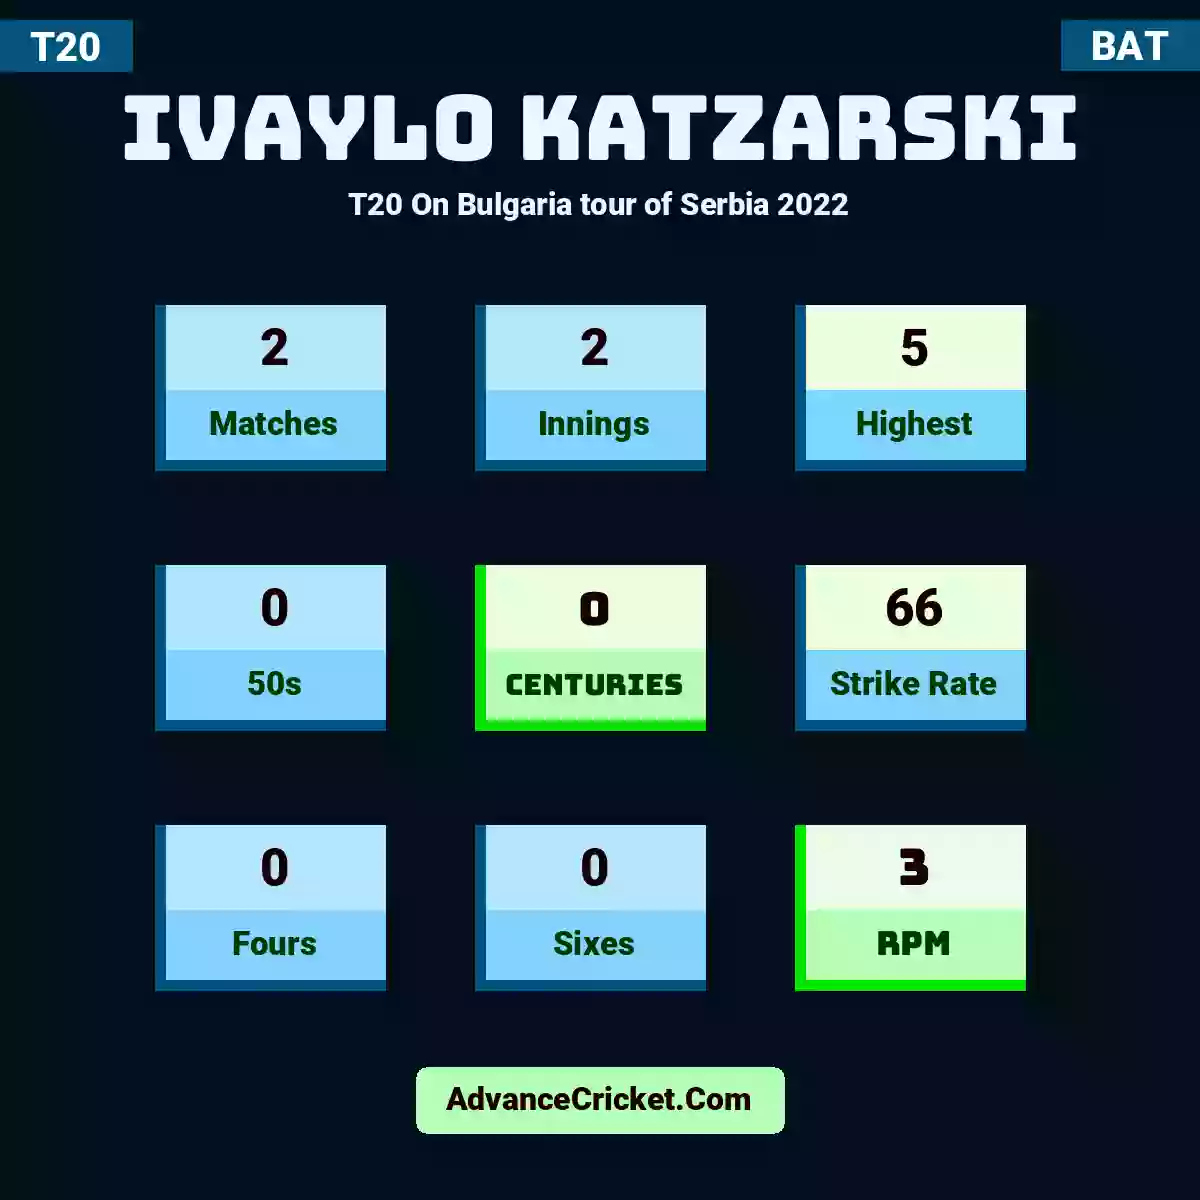 Ivaylo Katzarski T20  On Bulgaria tour of Serbia 2022, Ivaylo Katzarski played 2 matches, scored 5 runs as highest, 0 half-centuries, and 0 centuries, with a strike rate of 66. I.Katzarski hit 0 fours and 0 sixes, with an RPM of 3.